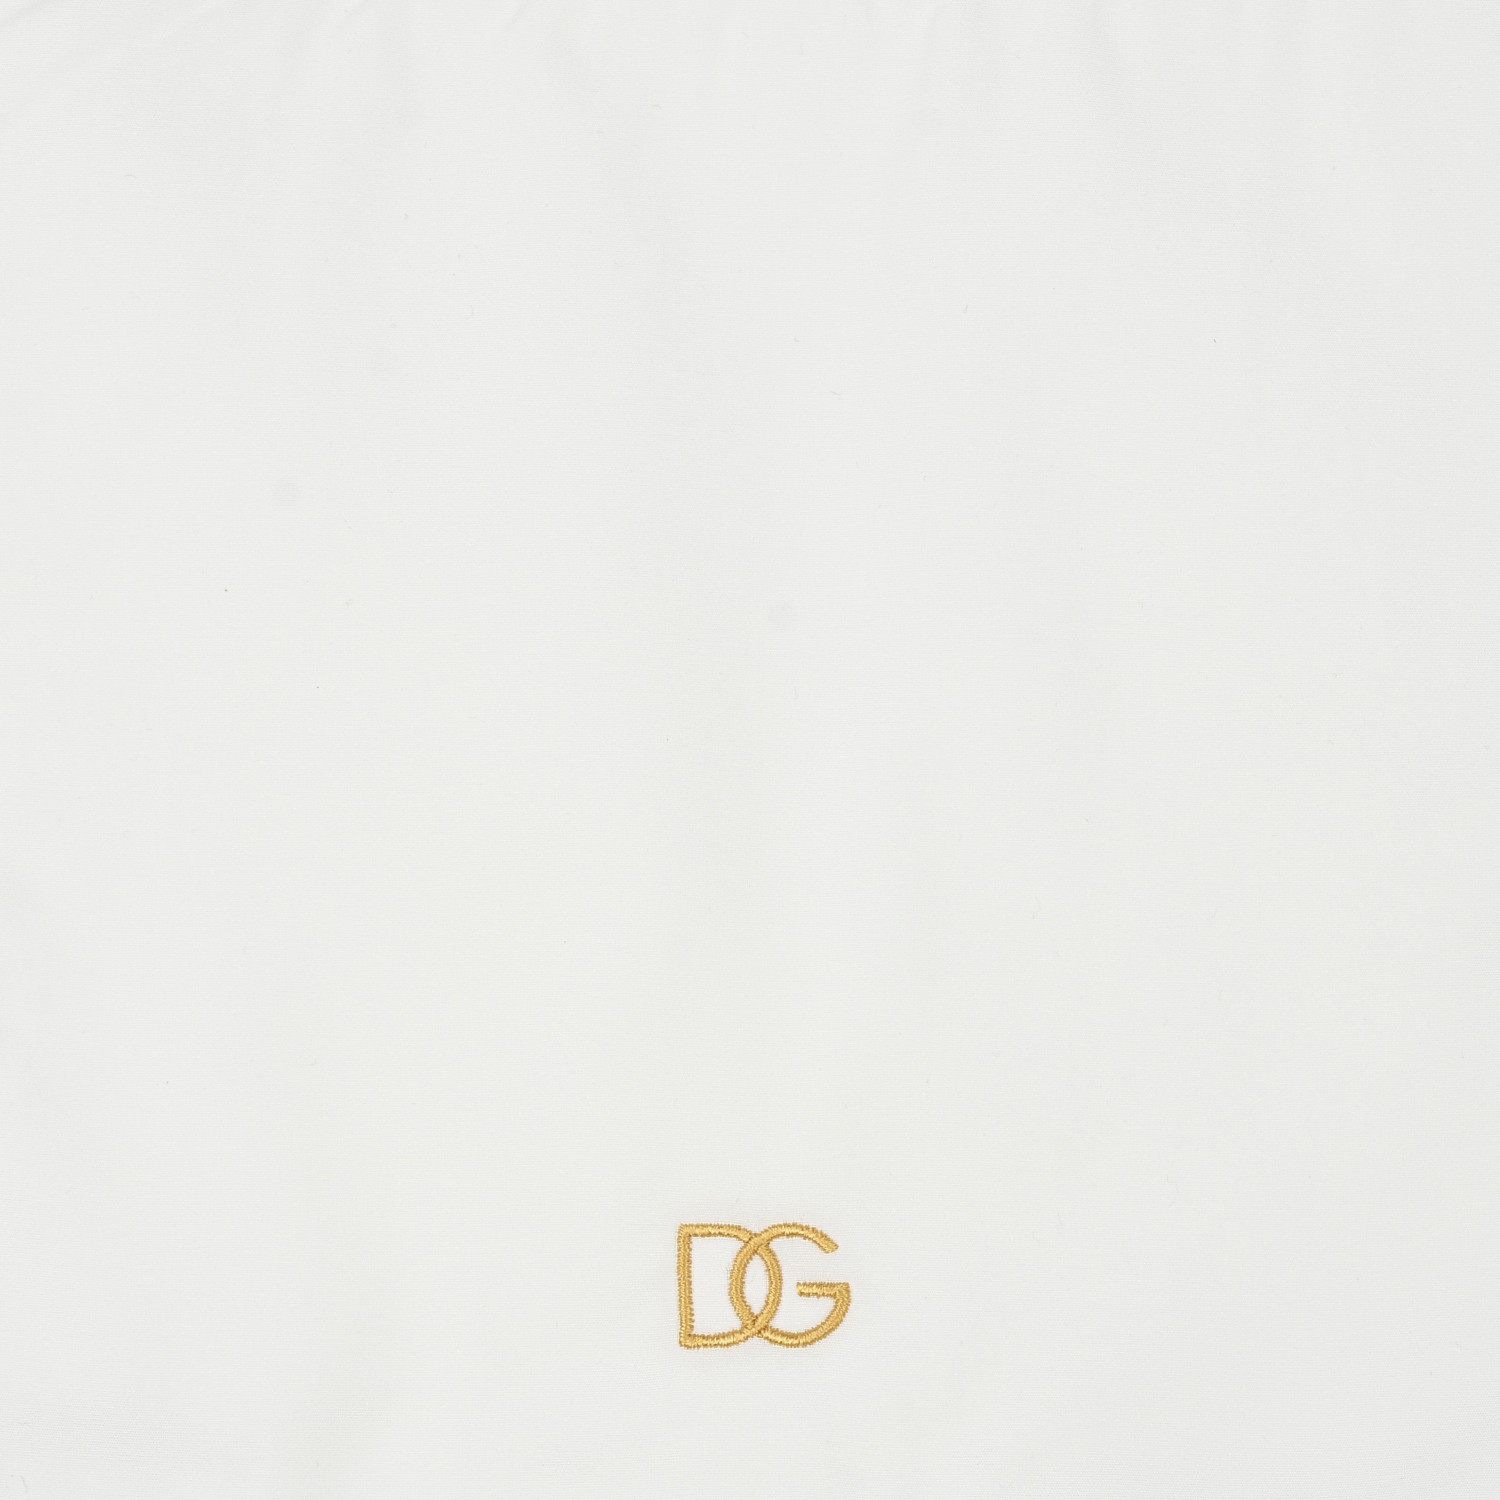 Кремовый плед с логотипом "DG", 80х80 см Dolce&Gabbana детский, размер unica - фото 3